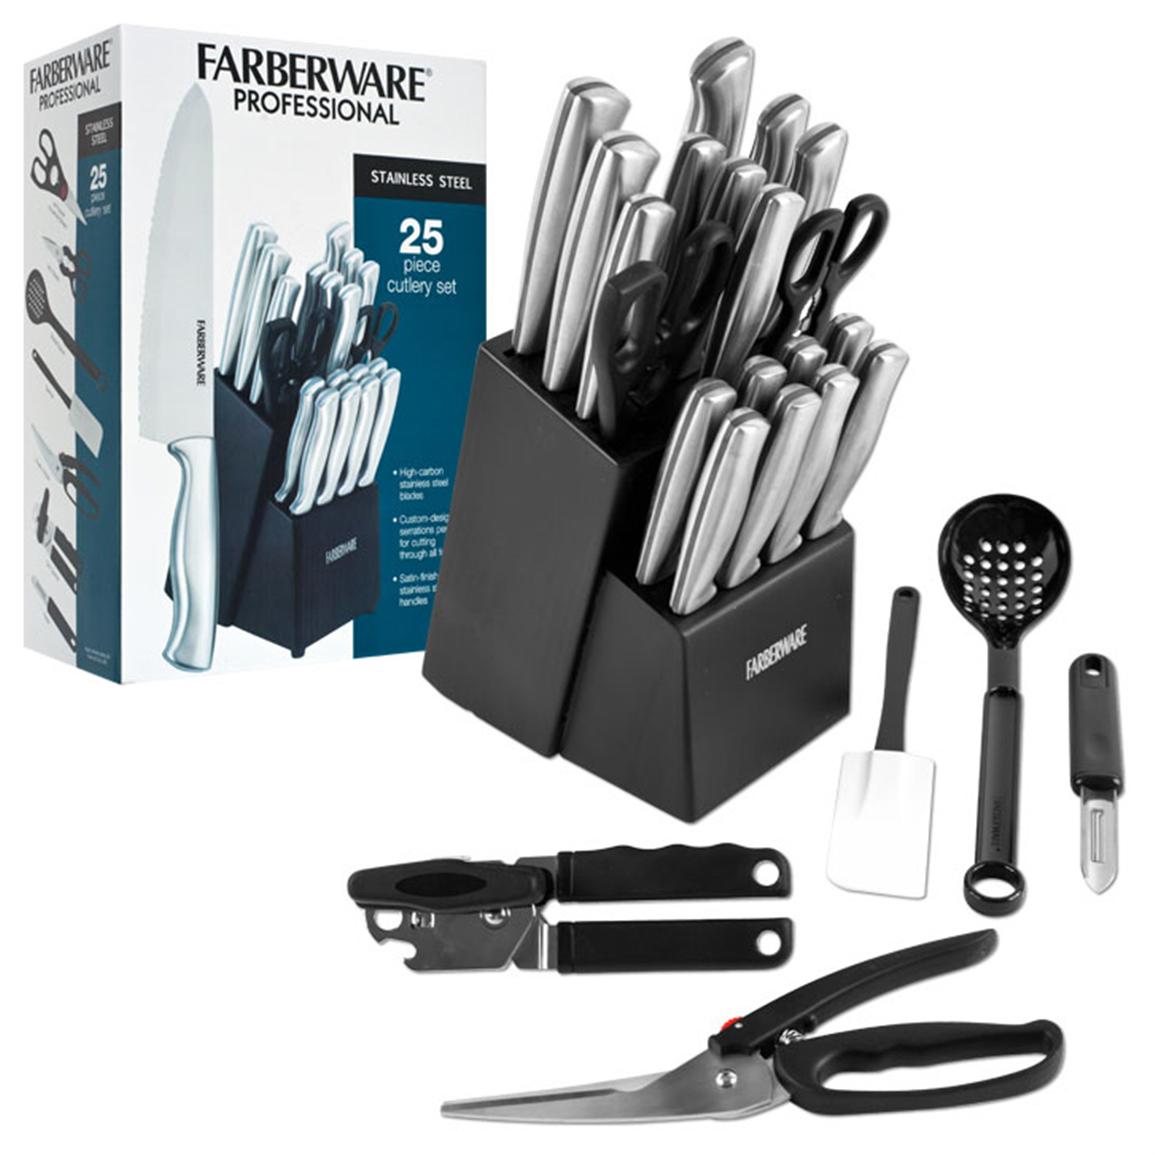 Farberware® Professional Stainless Steel Cutlery Set, 25 - Pc. - 207389 Farberware Stainless Steel Cutlery Set